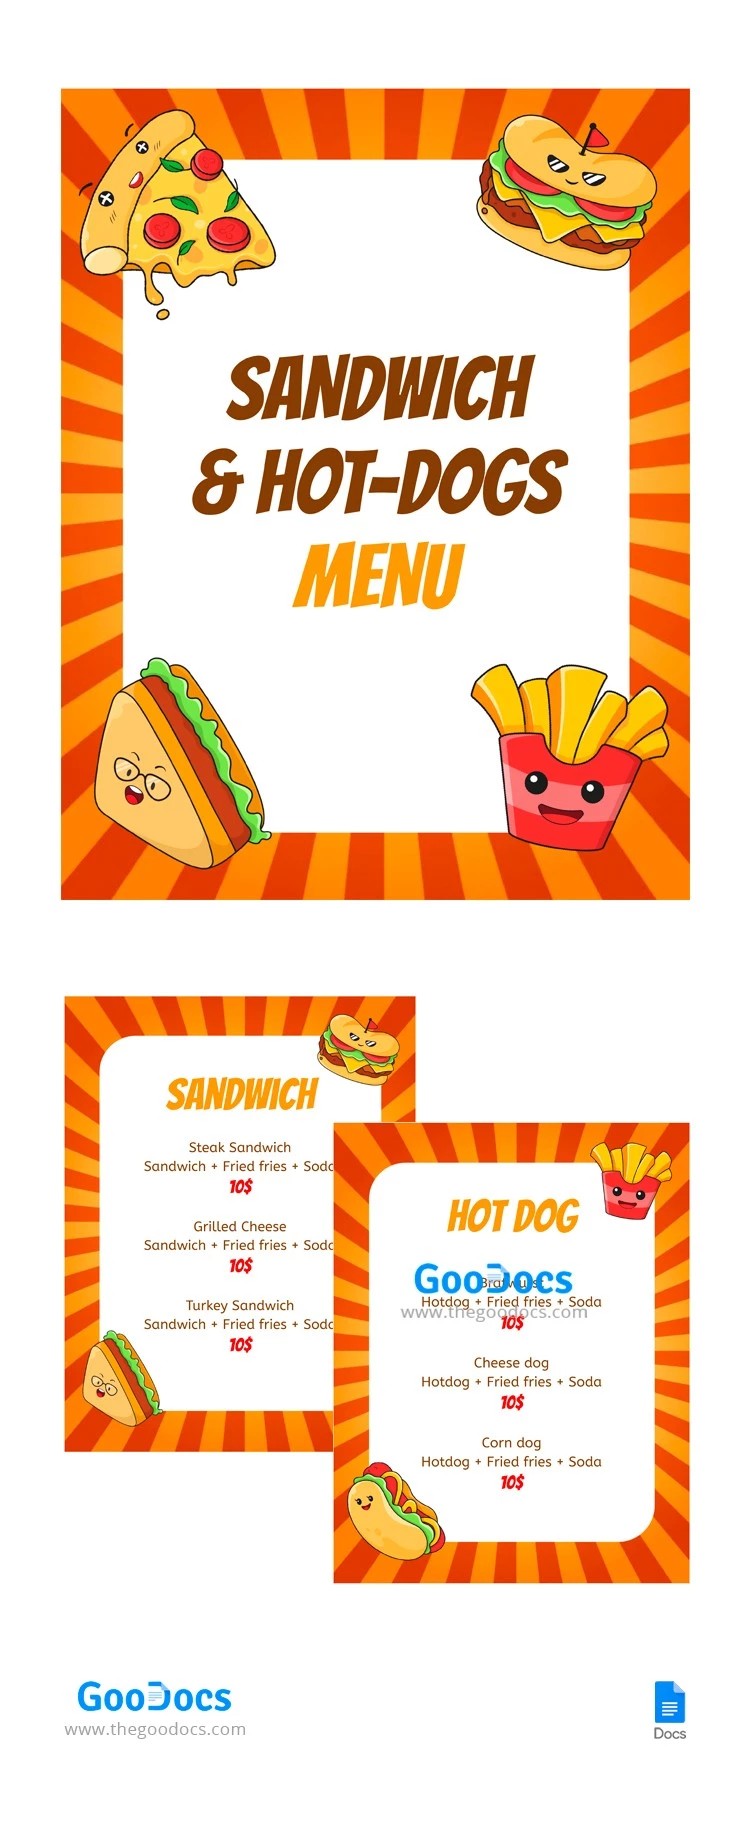 Menú de sandwich y hot dogs. - free Google Docs Template - 10064599